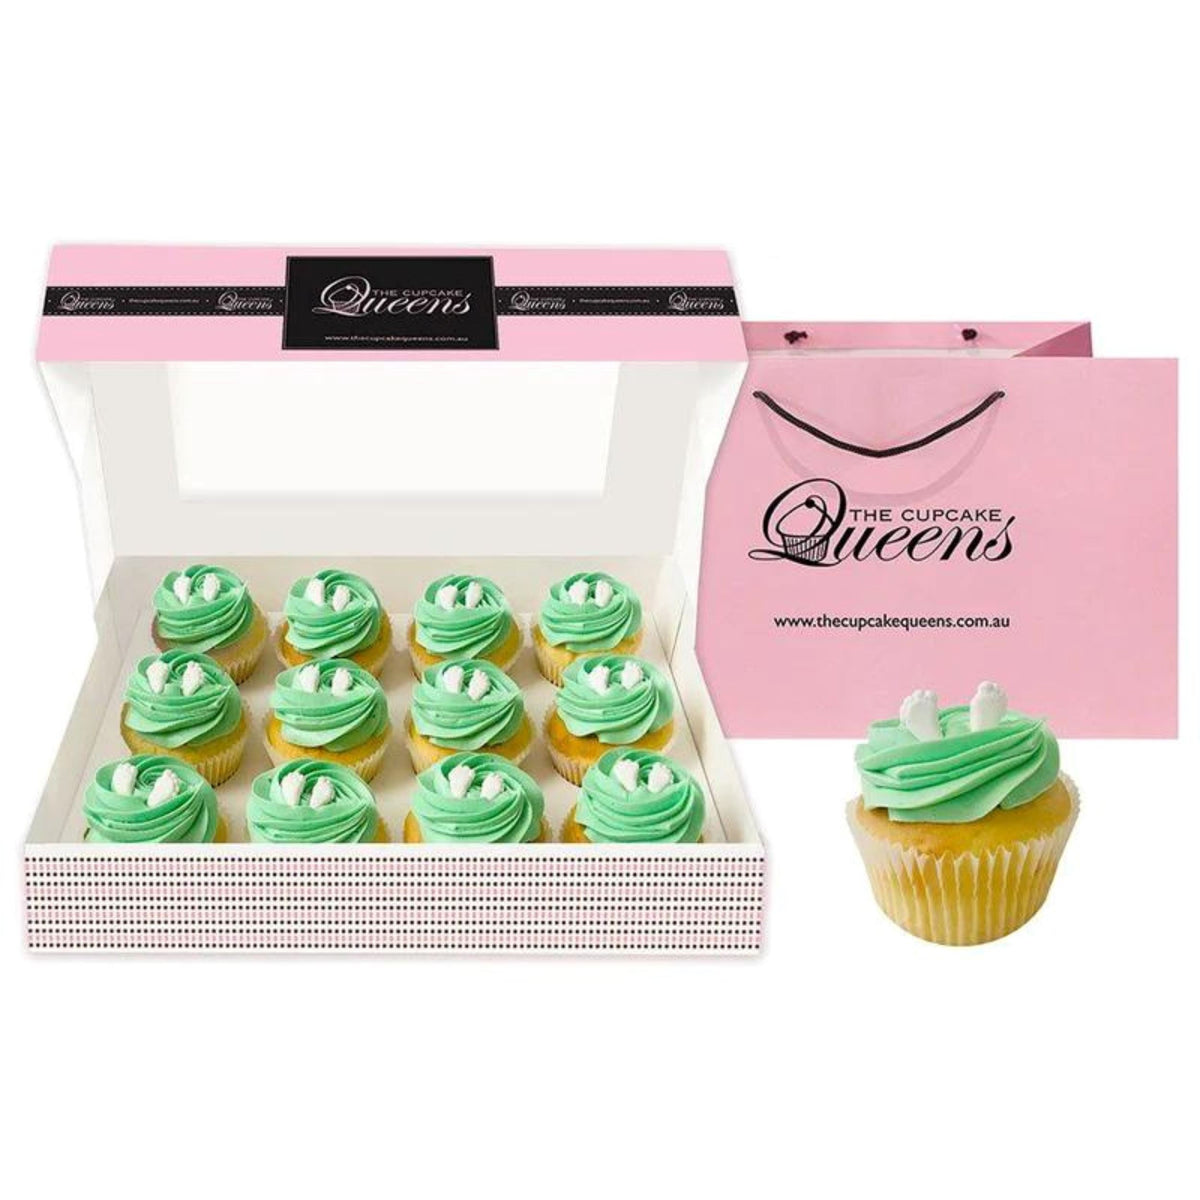 Baby Green Deluxe Cupcakes The Cupcake Queens 